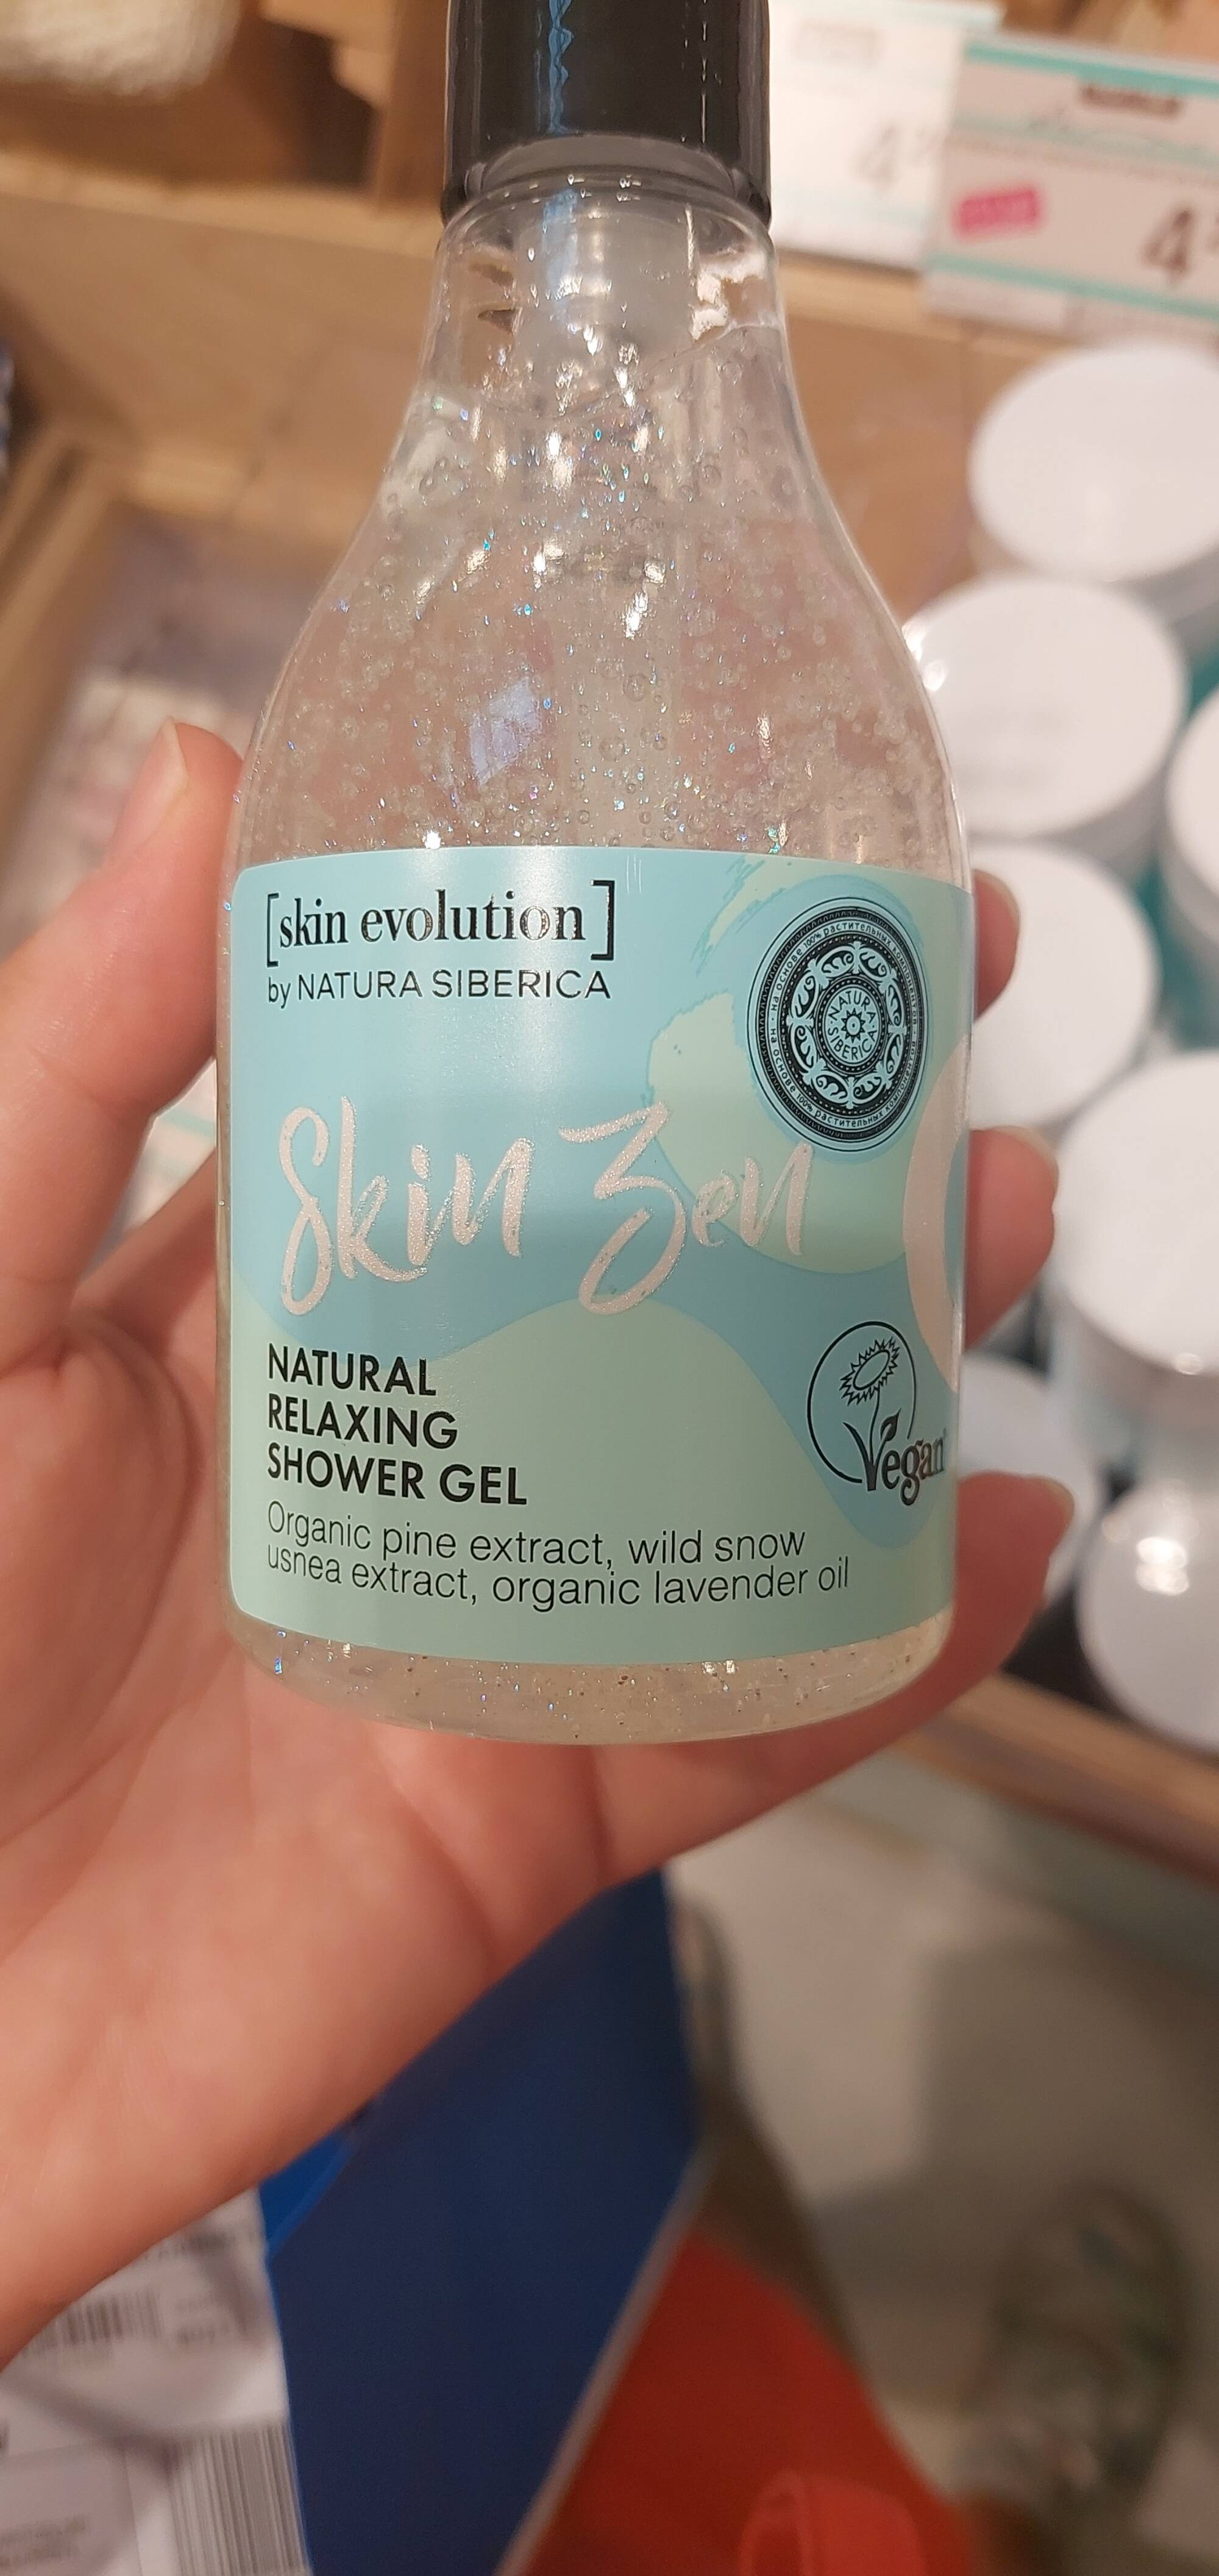 NATURA SIBERICA - Skin Evolution - Natural relaxing shower gel